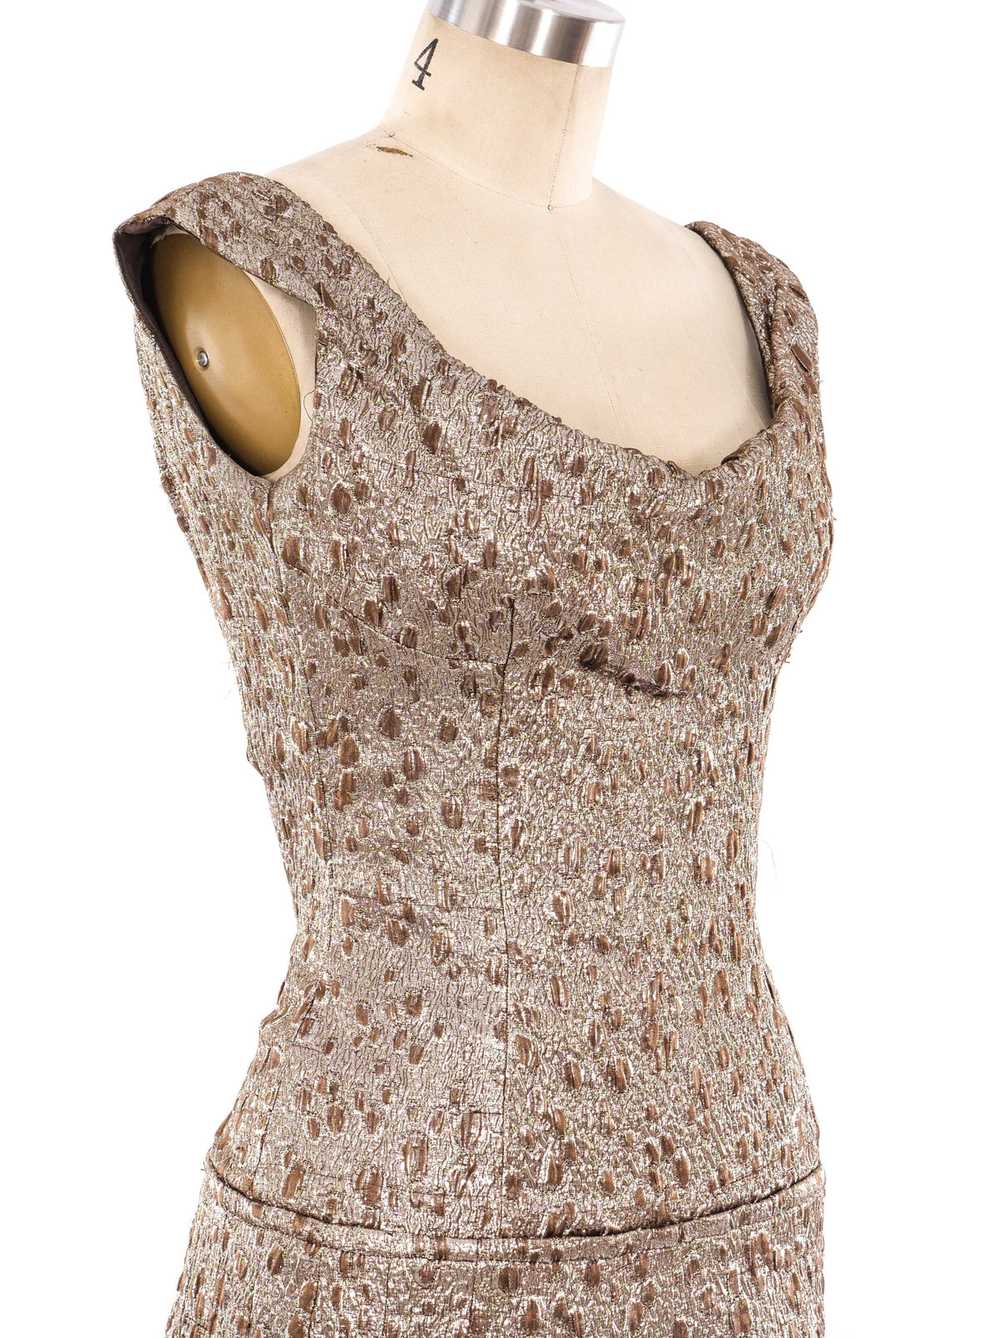 Fur Trimmed Metallic Brocade Dress - image 4